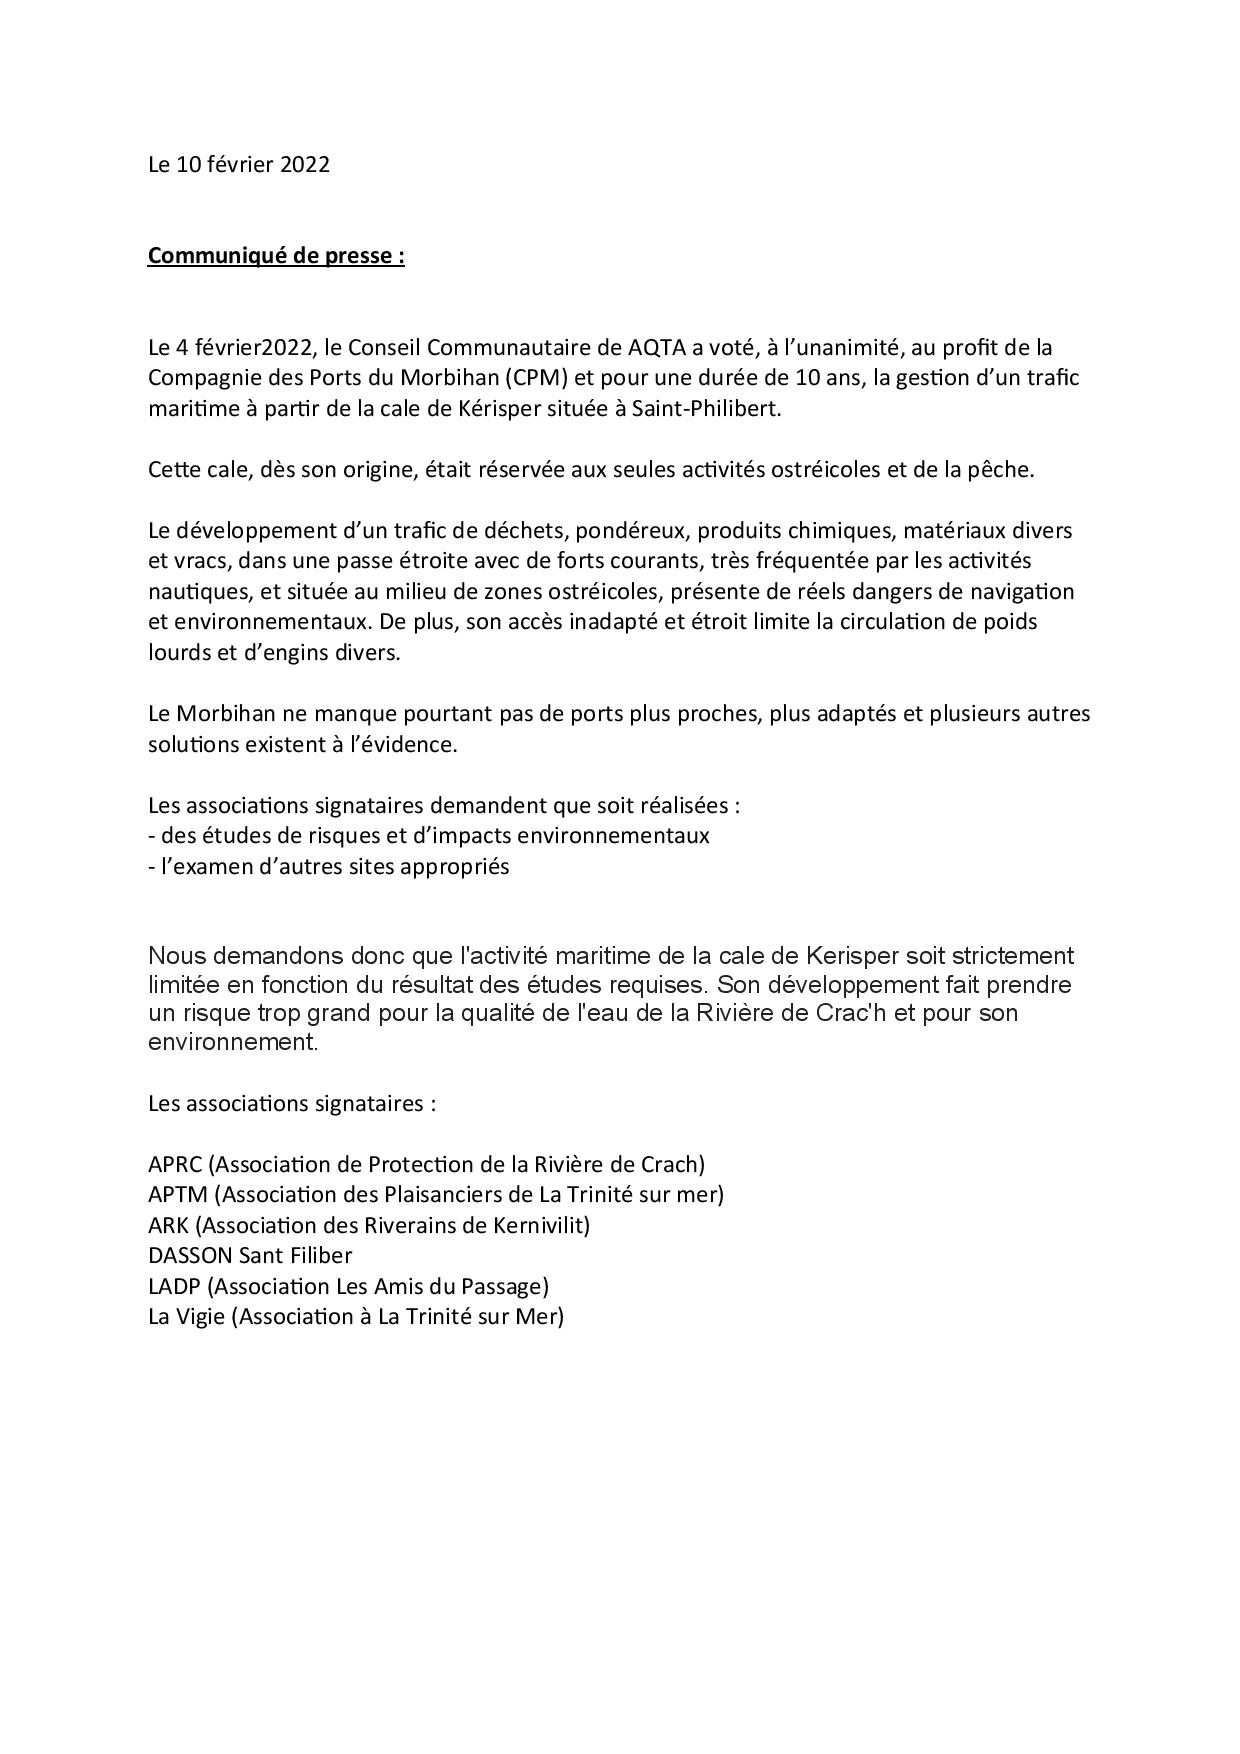 2022 02 10 Comuuniqué de presse - APRC APTM ARK Dasson LADP La Vigie-page-001.jpg